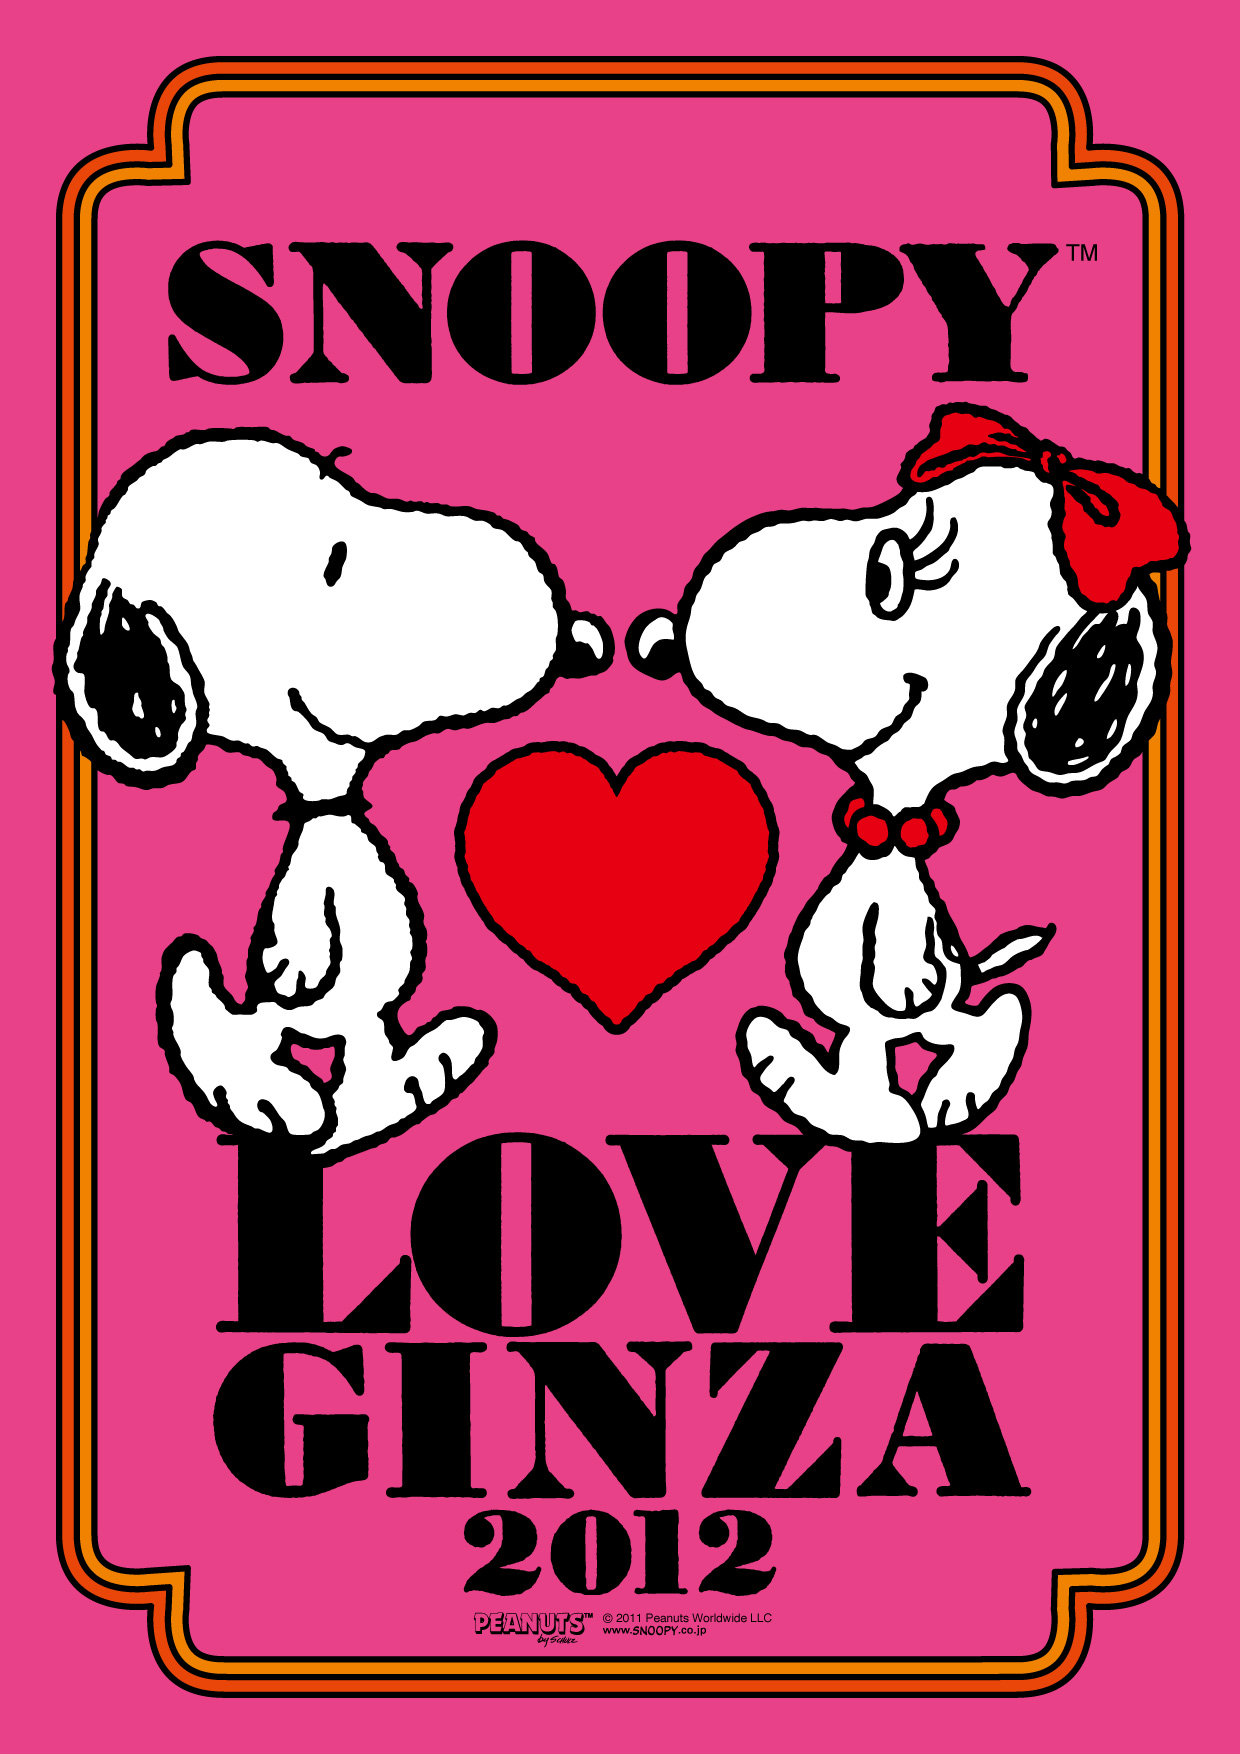 Snoopy Love Ginza 2012 豪華限定イベントが続々登場 谷川俊太郎さんオープニングイベントレポート 館内レストラン ショップでは本イベント限定メニューをご用意 ソニー企業株式会社のプレスリリース